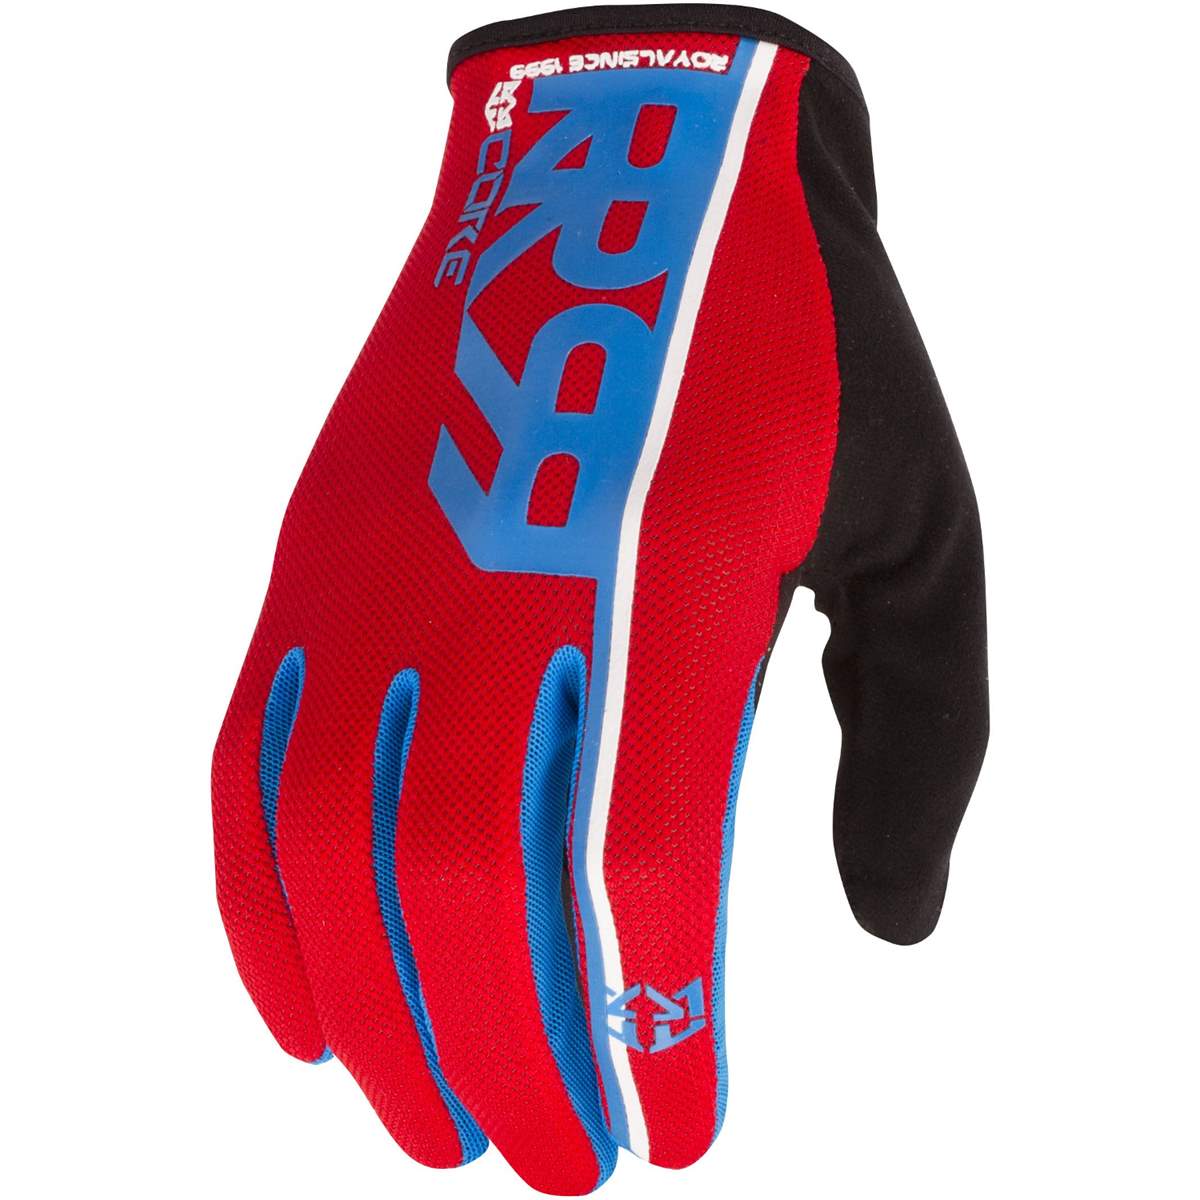 Royal Racing Handschuhe Core Red/Sky Blue/Black